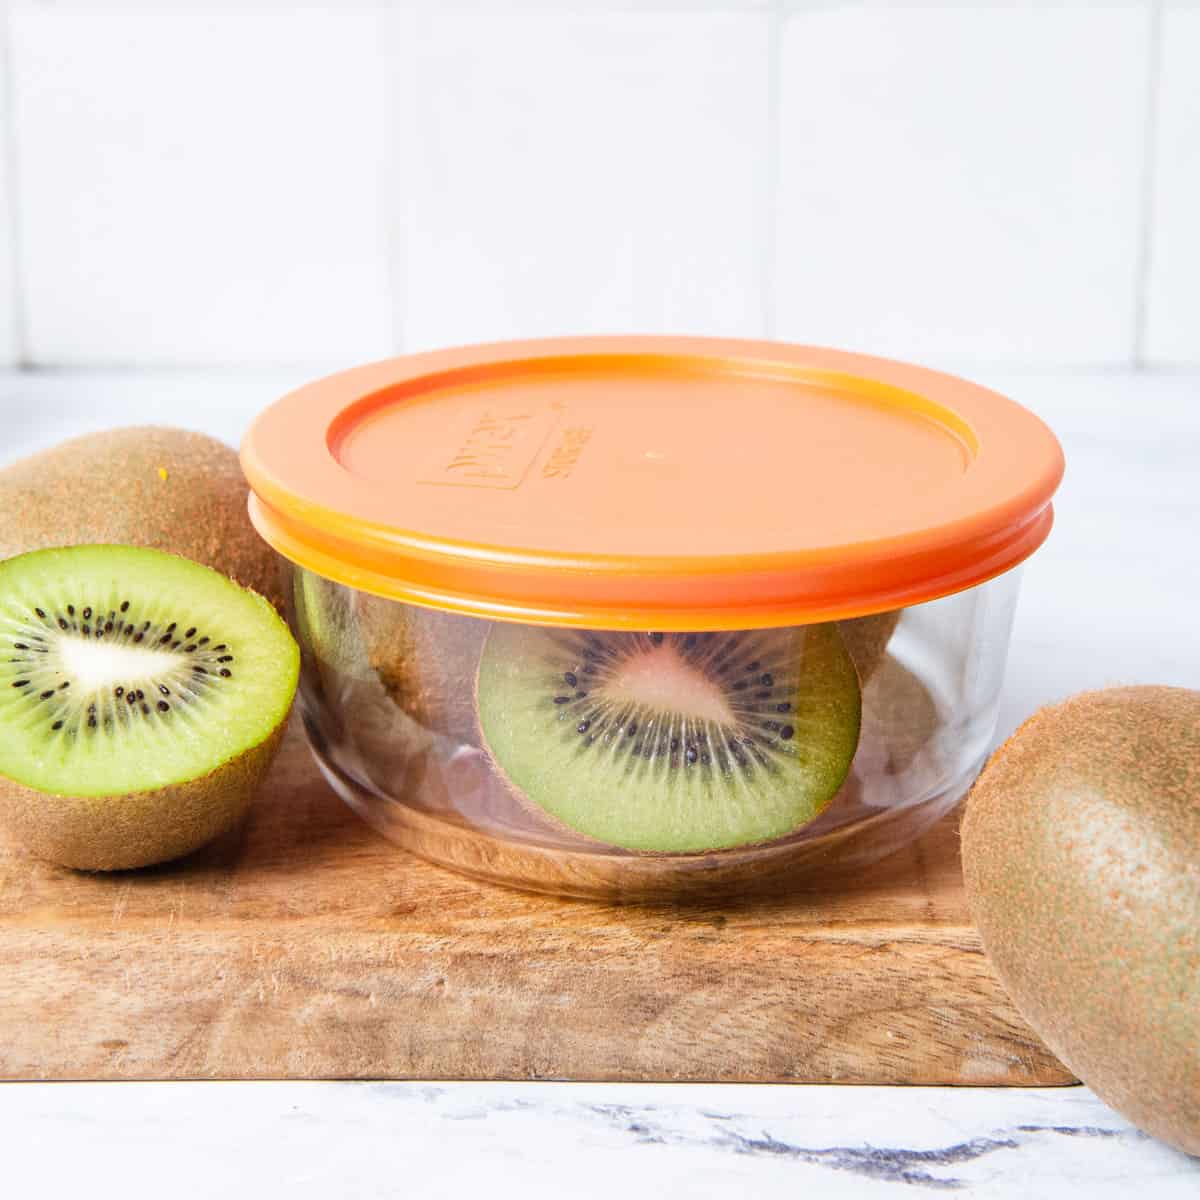 How to Store Kiwi Fruit So It Lasts Longer